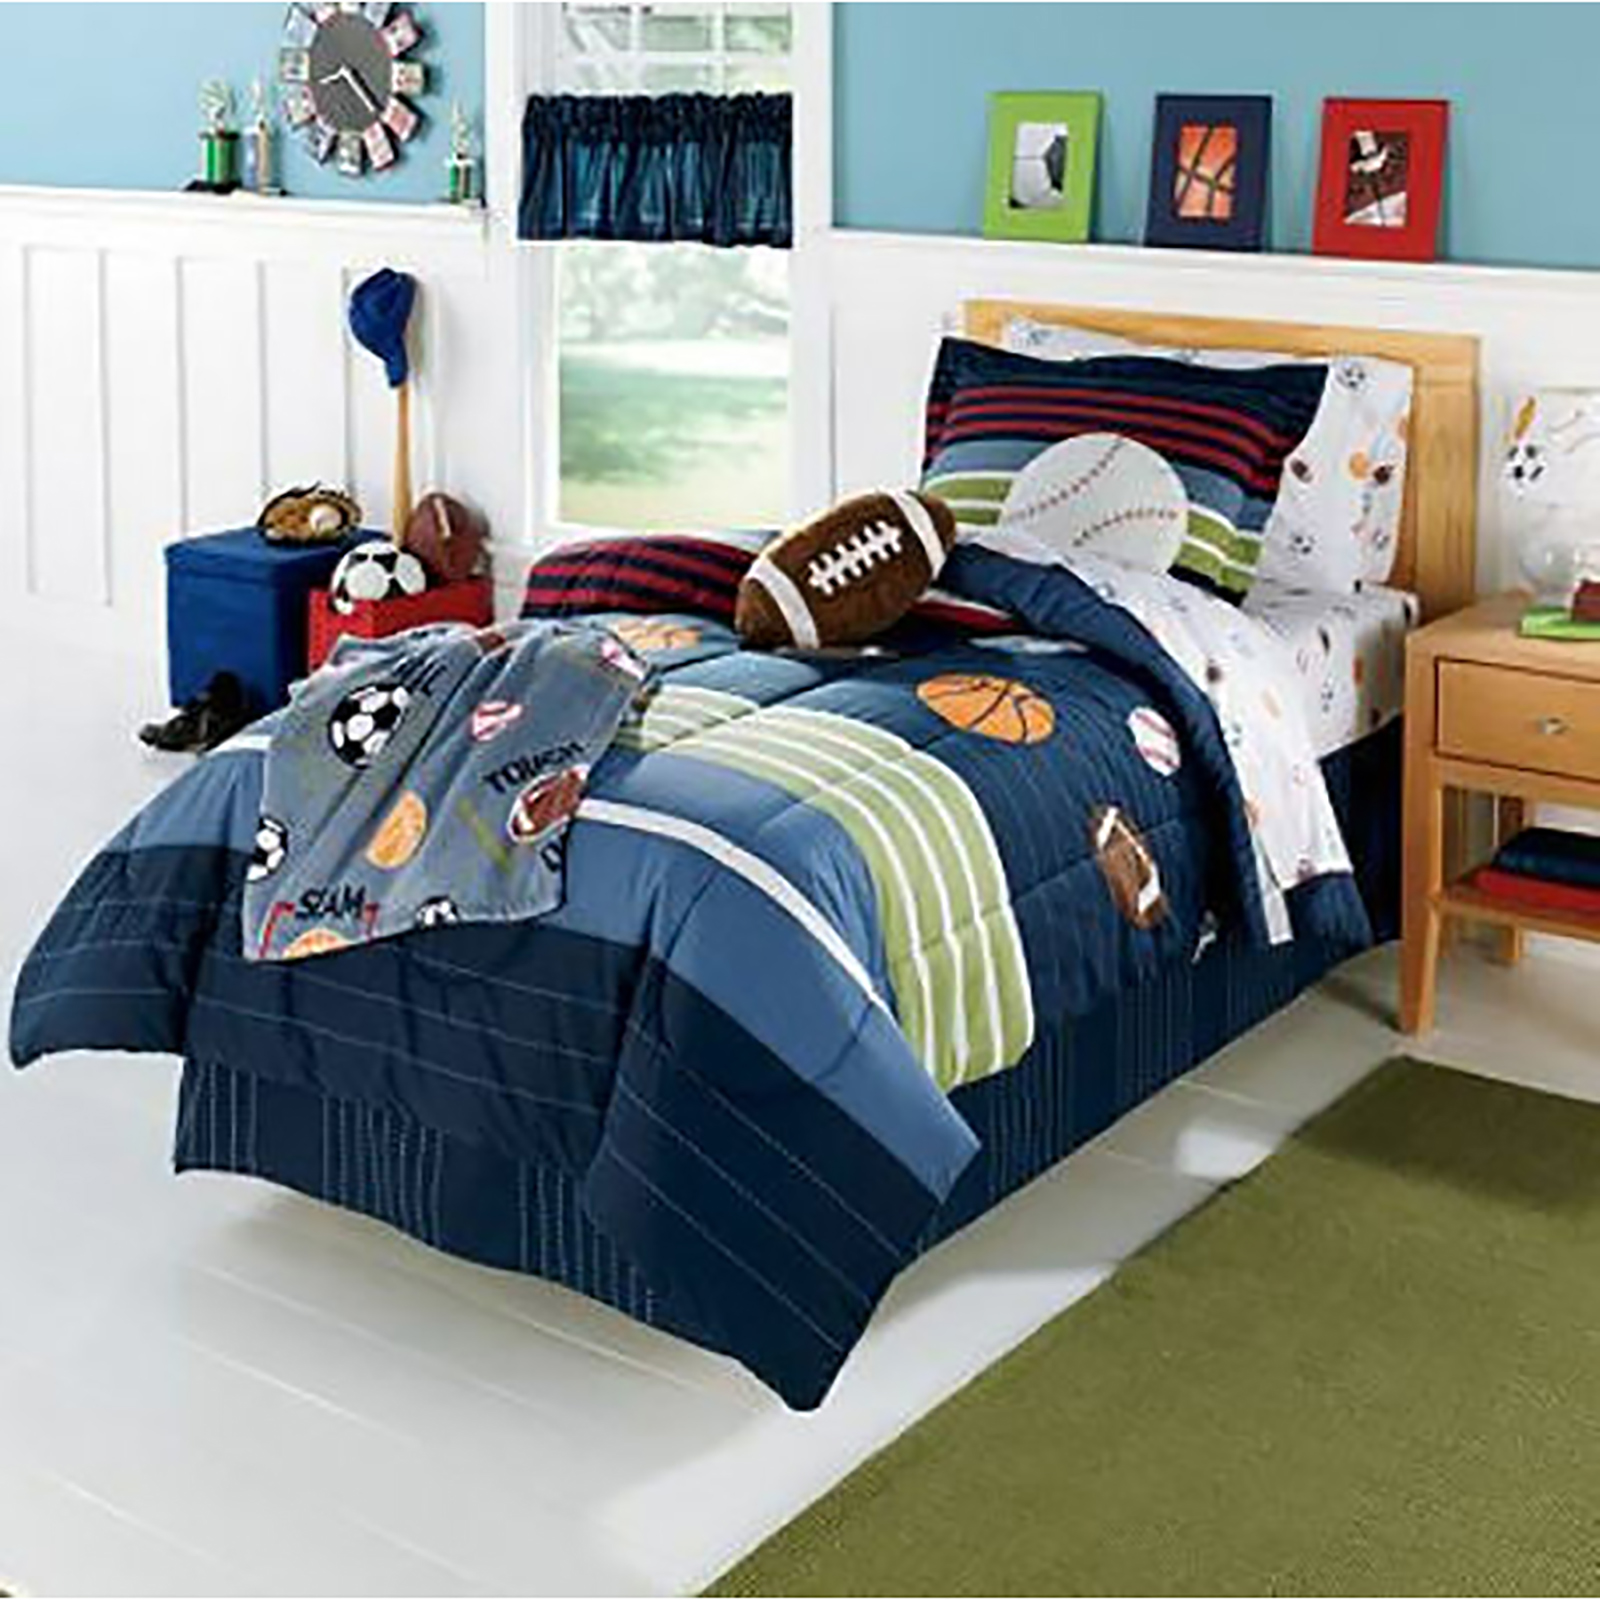 Kids Bedding 246537838 MVP Sports 7pc. Comforter Set - Blue